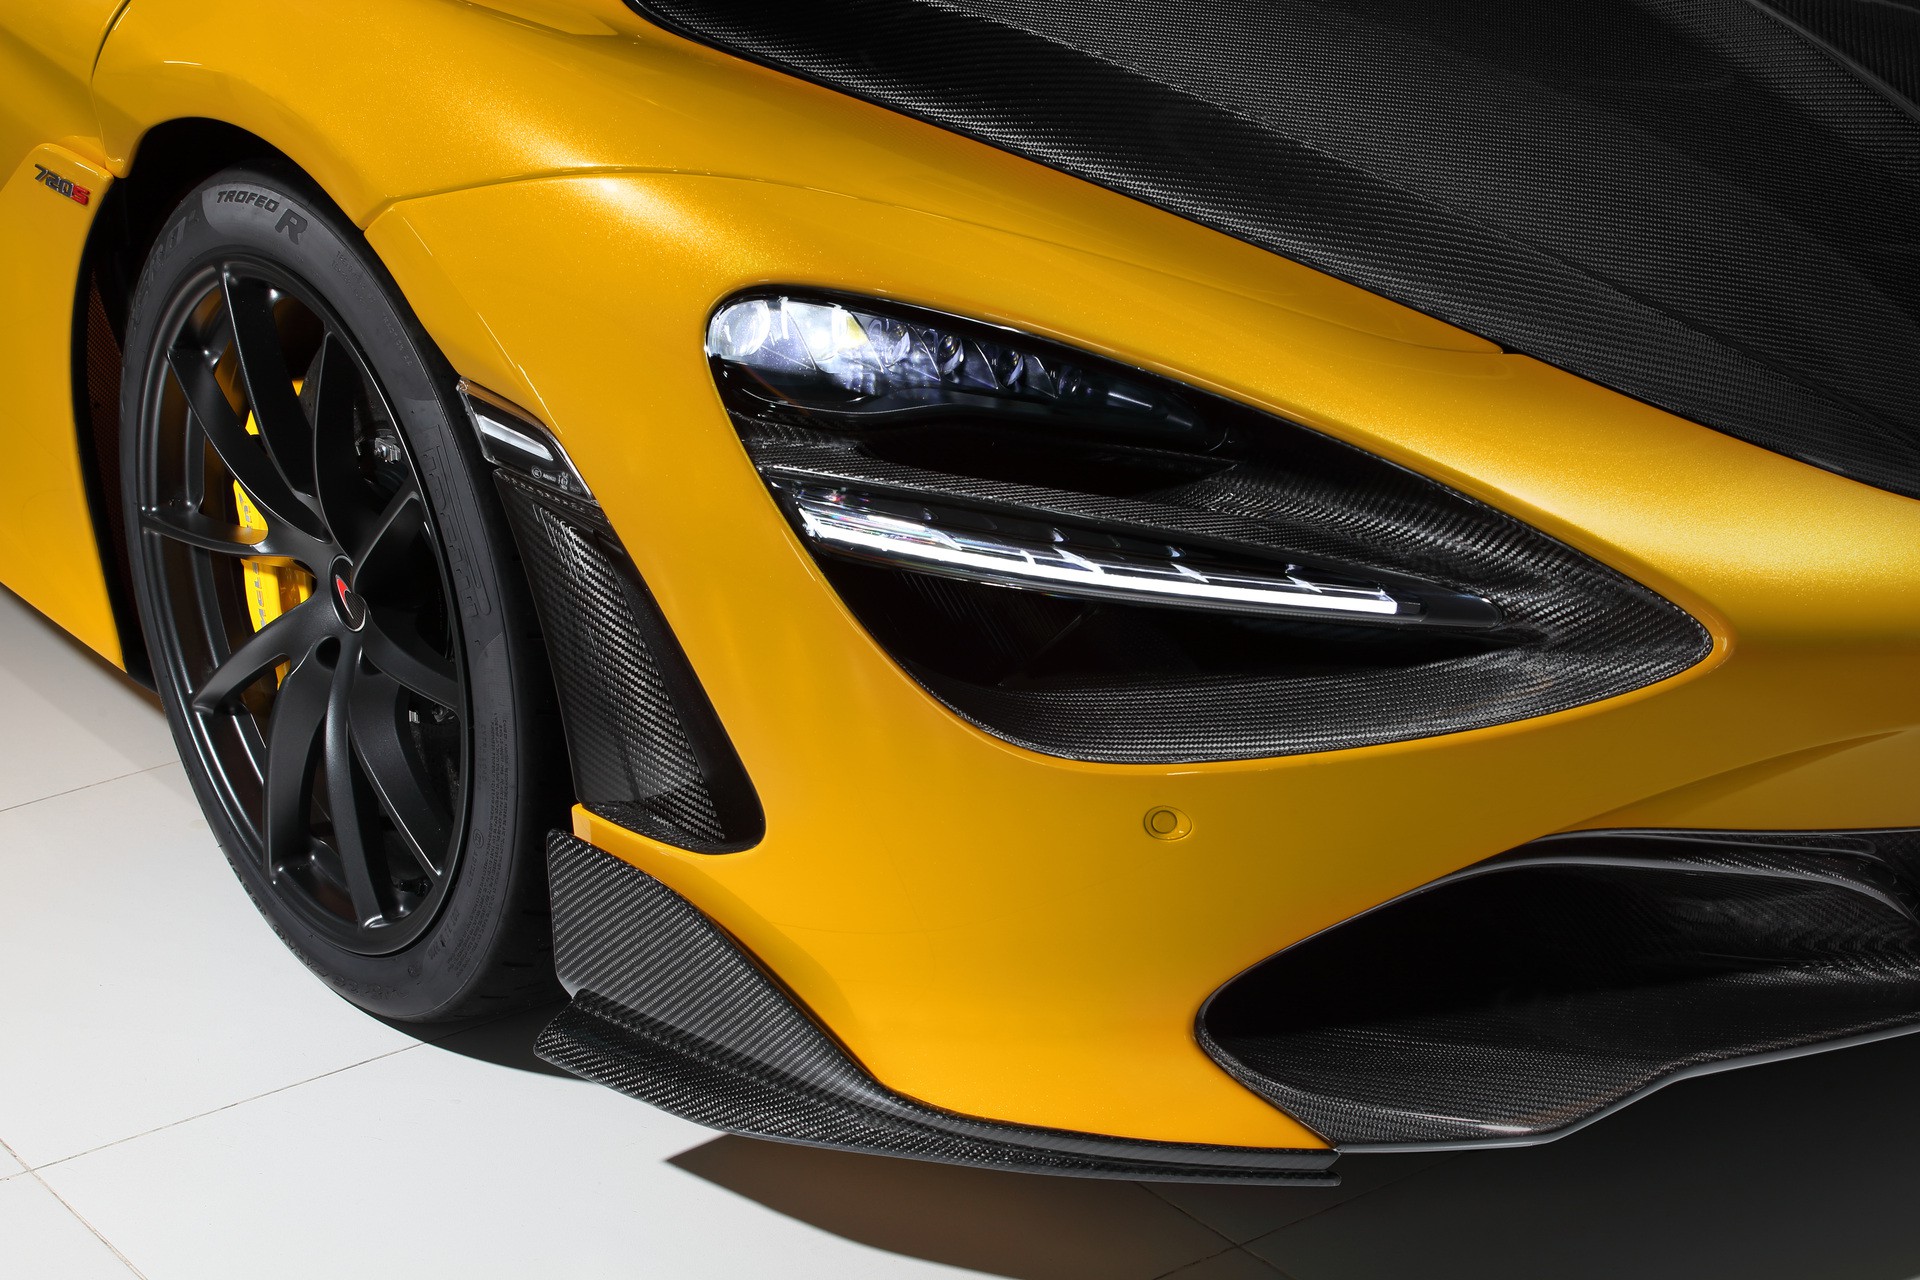 Topcar Design body kit for McLaren 720s